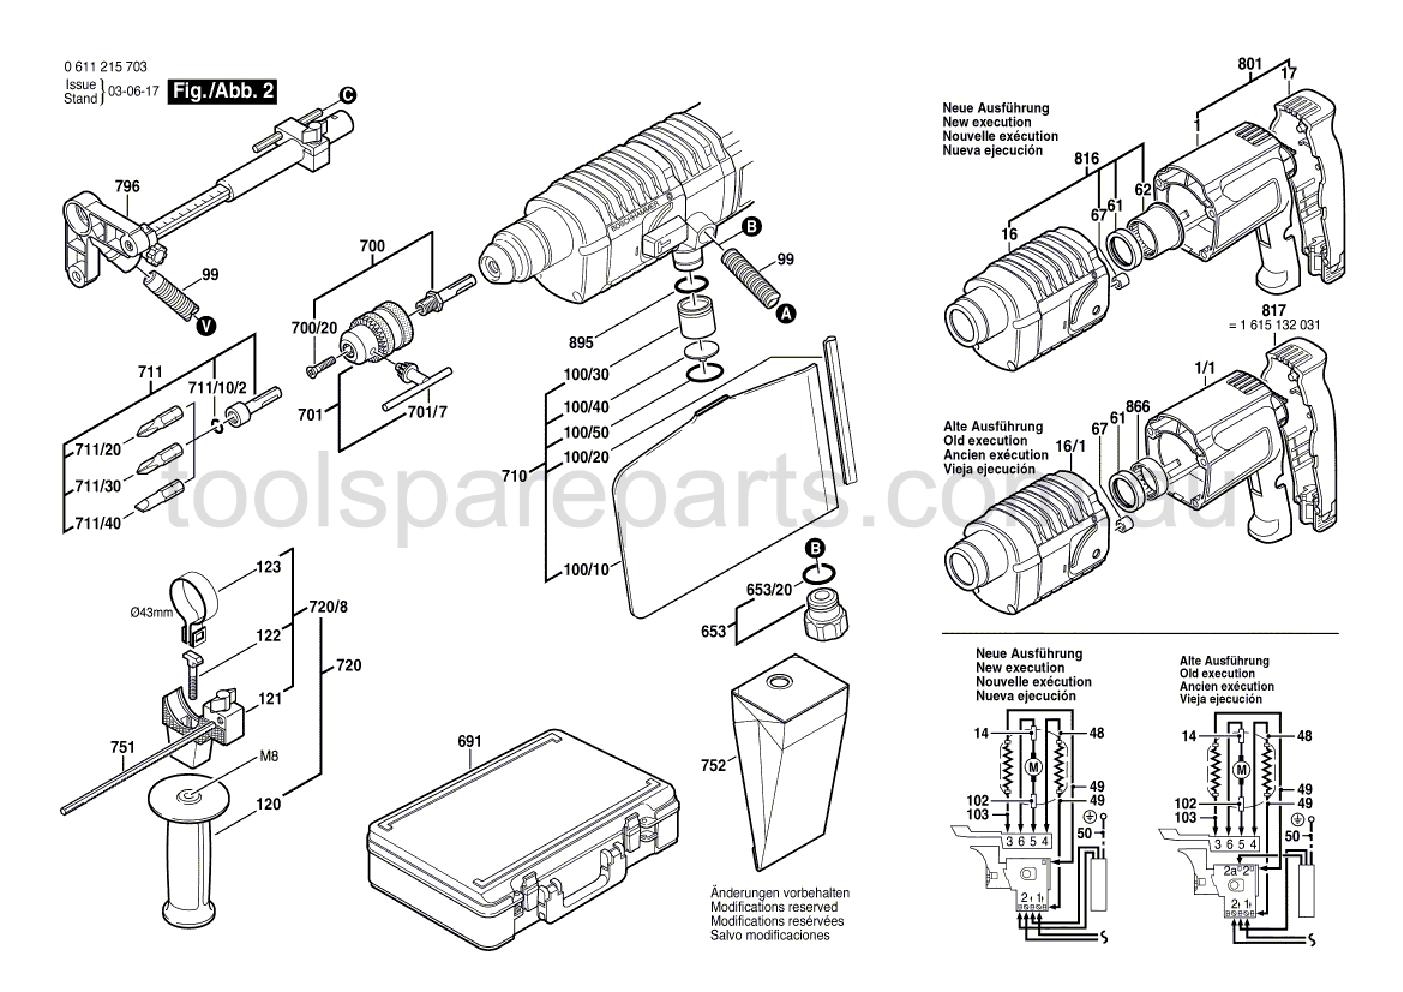 Bosch GBH 2-20 REA 0611215737  Diagram 2